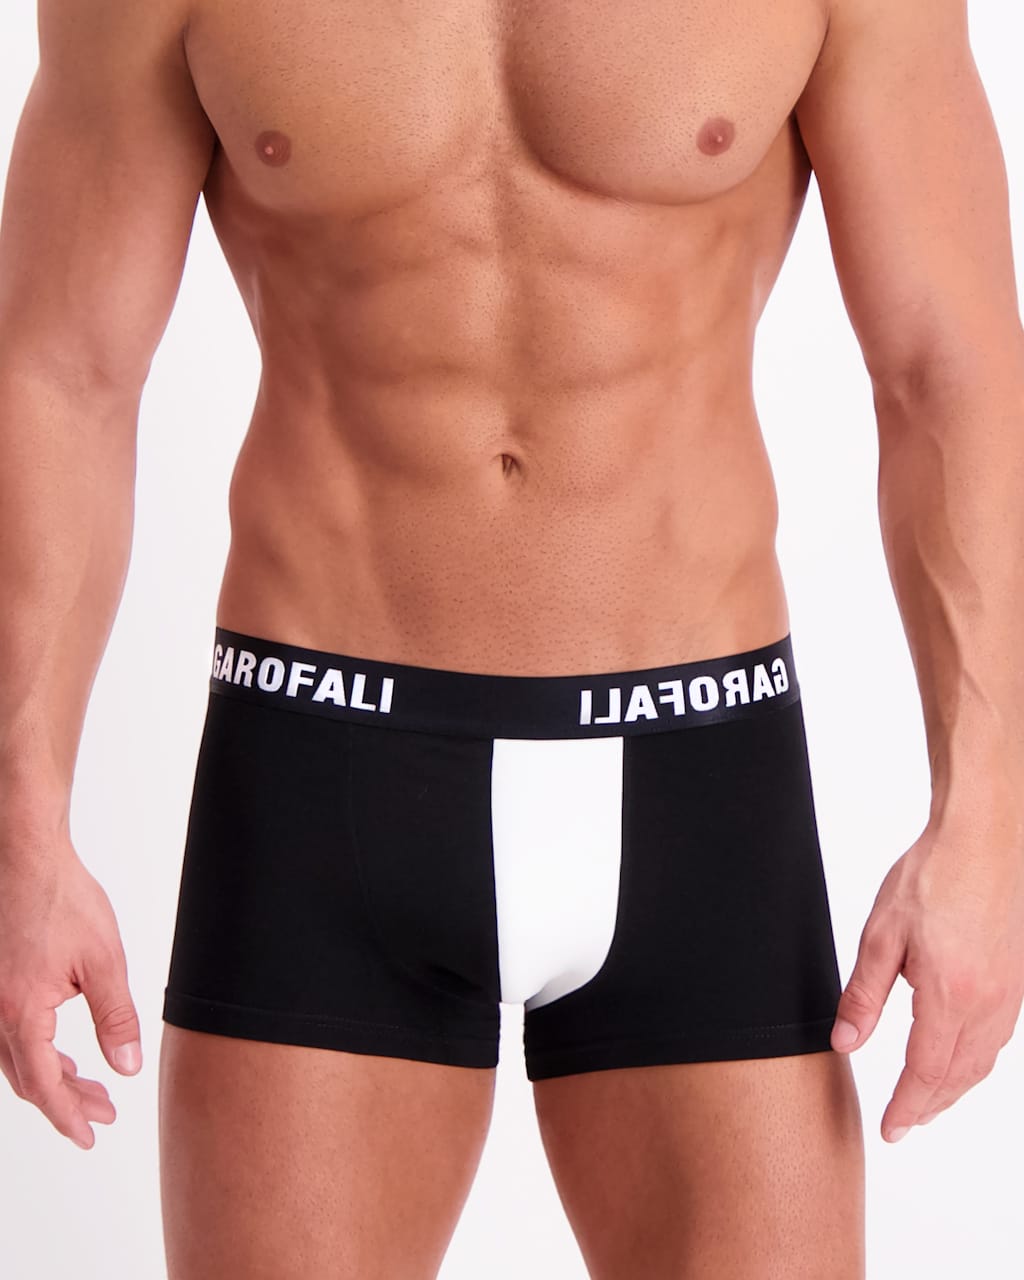 Underwear Mens Fashion Garofali Male